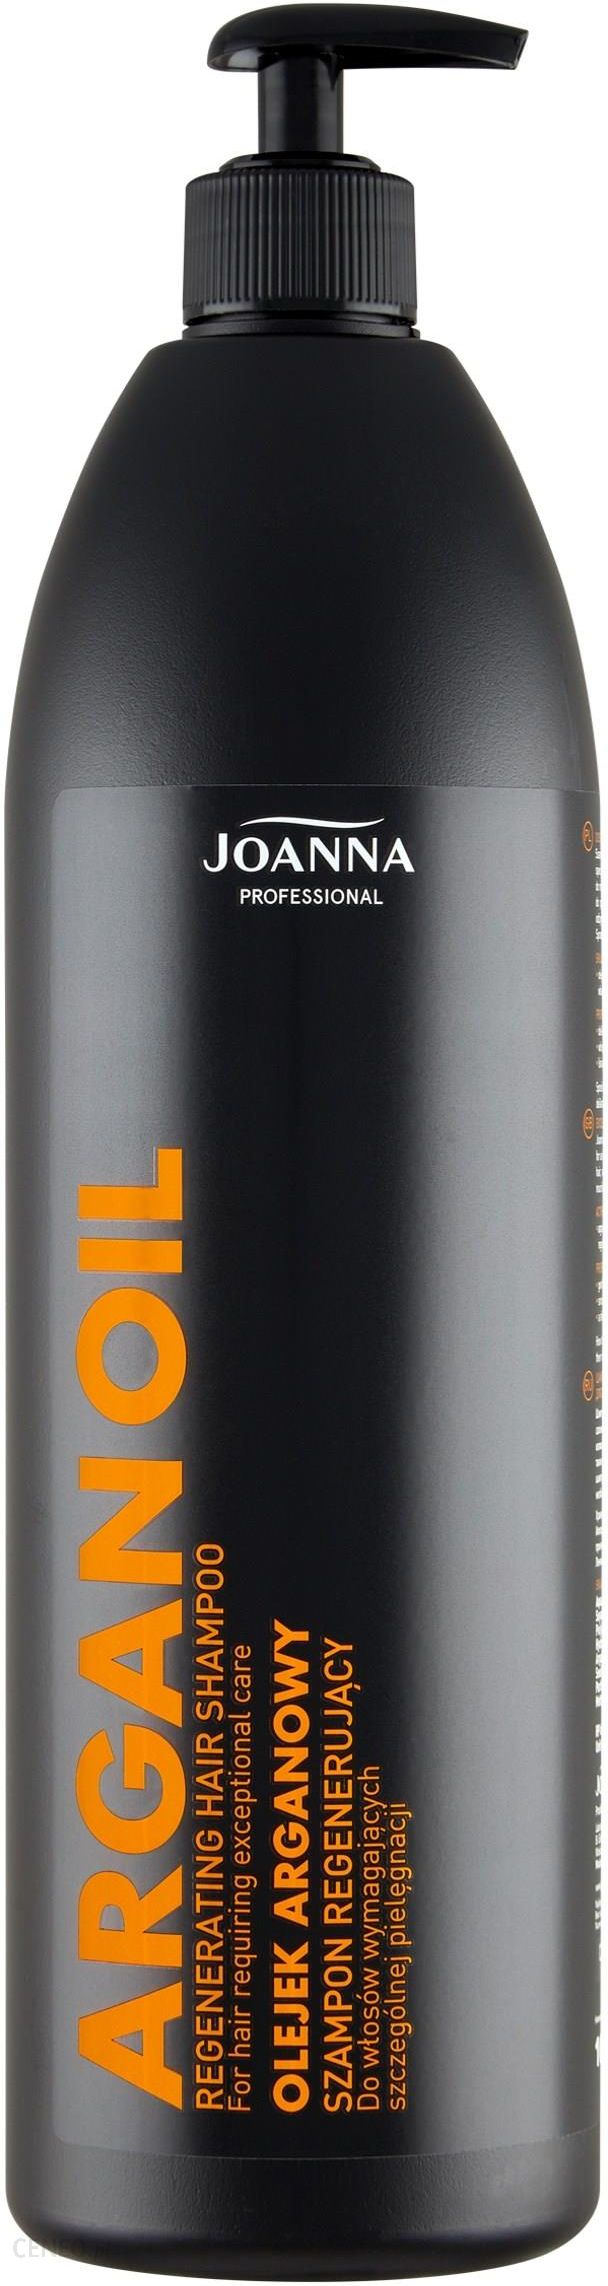 joanna szampon z agranem